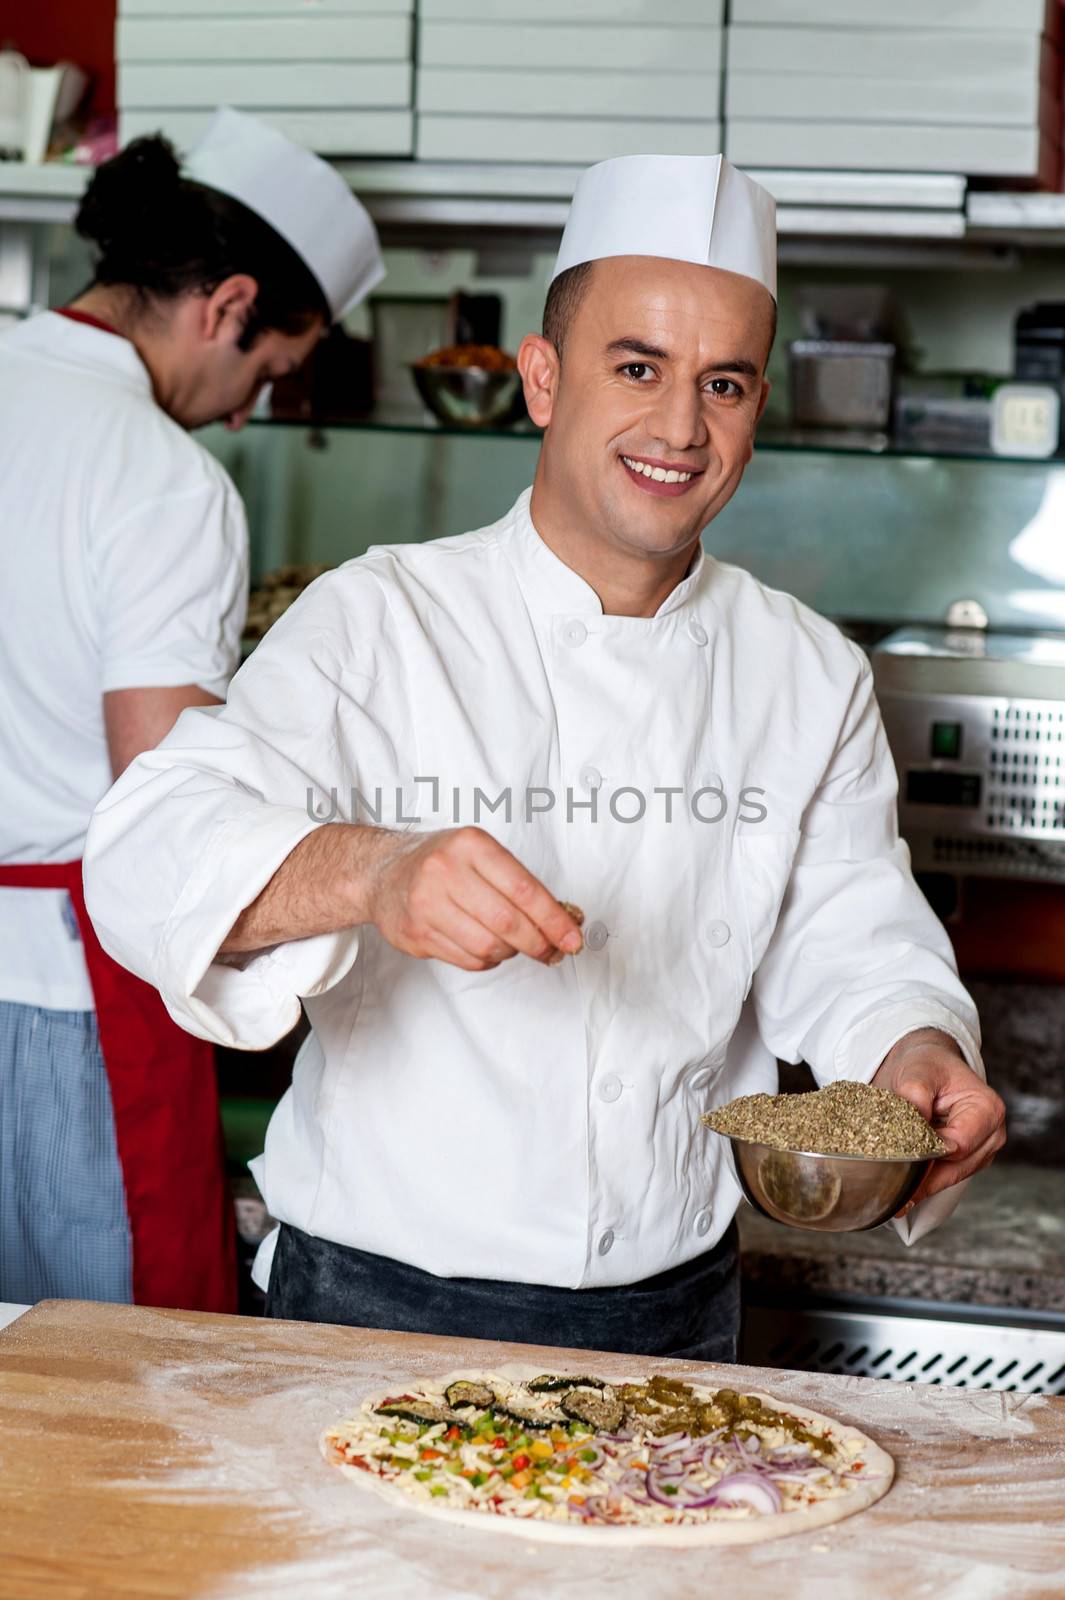 Experienced chef preparing pizza in kitchen